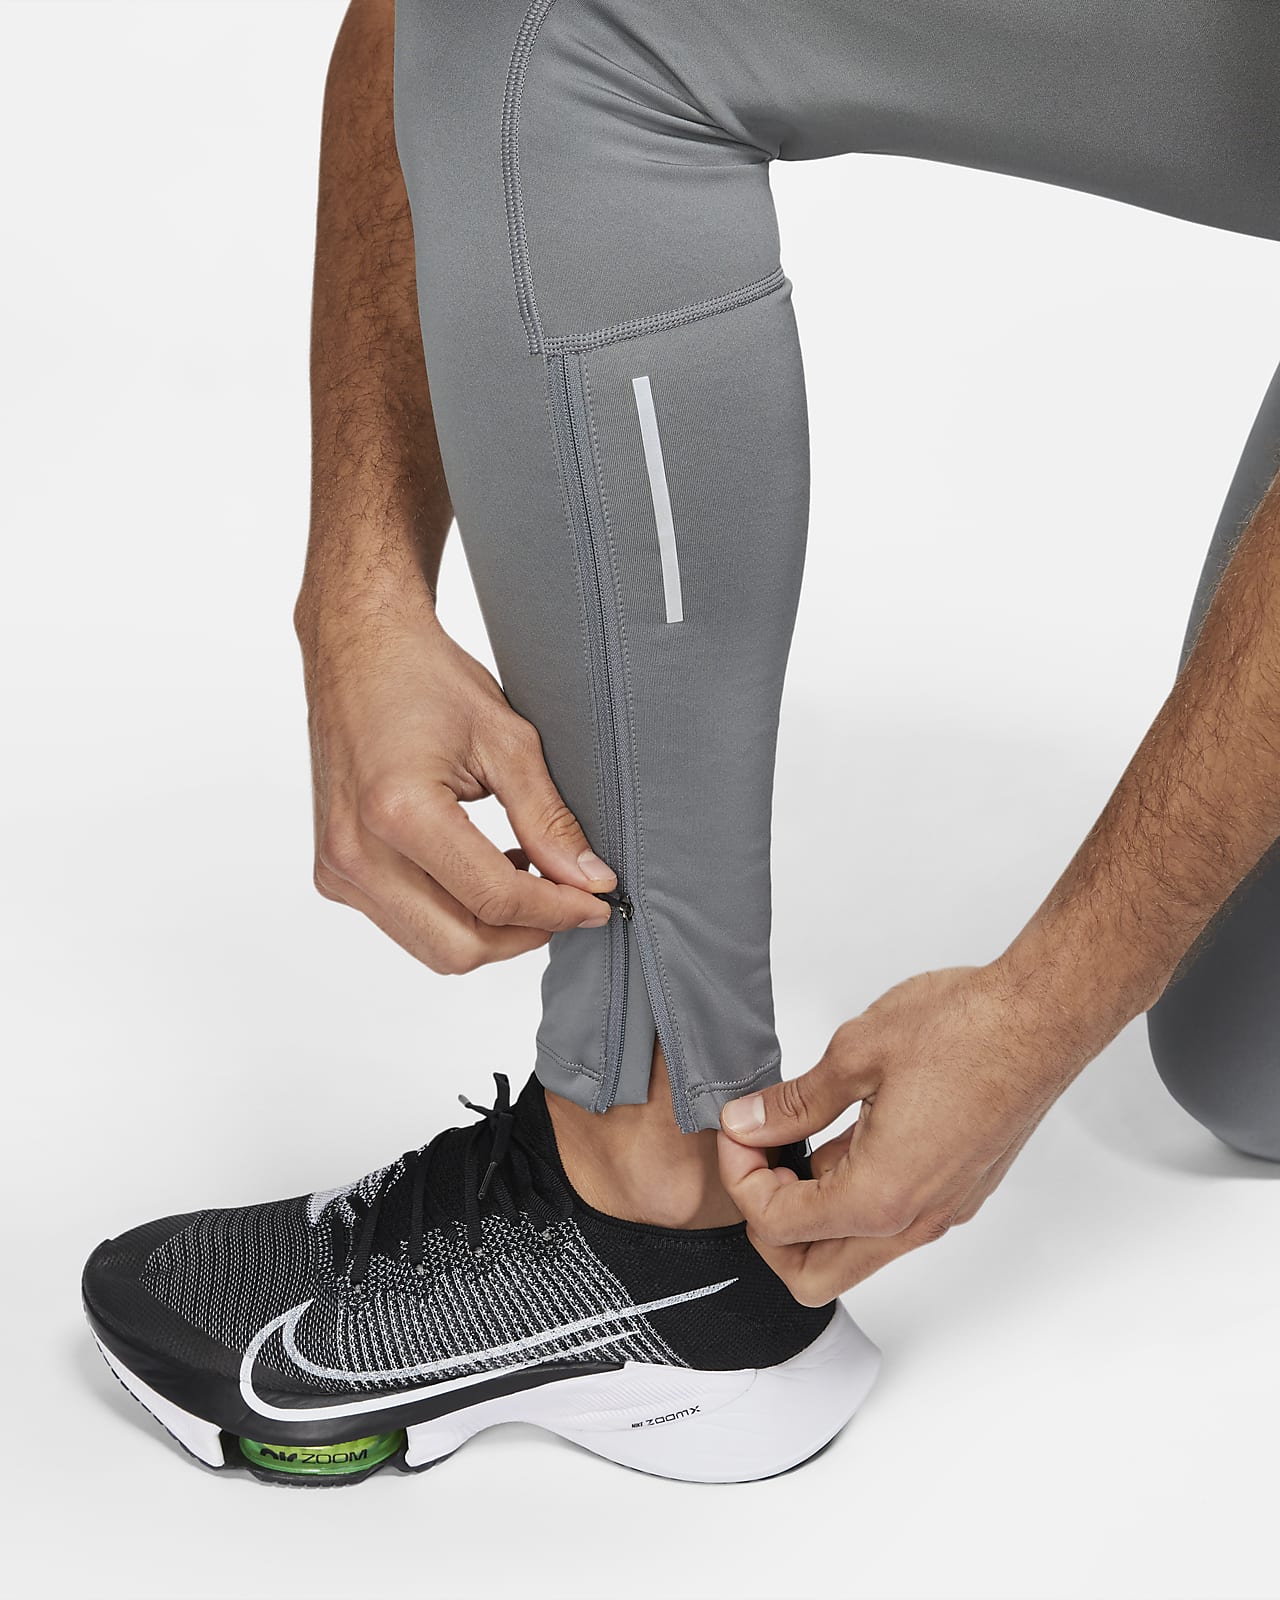 Pantalon de jogging Nike Yoga Dri-FIT pour homme. Nike CA